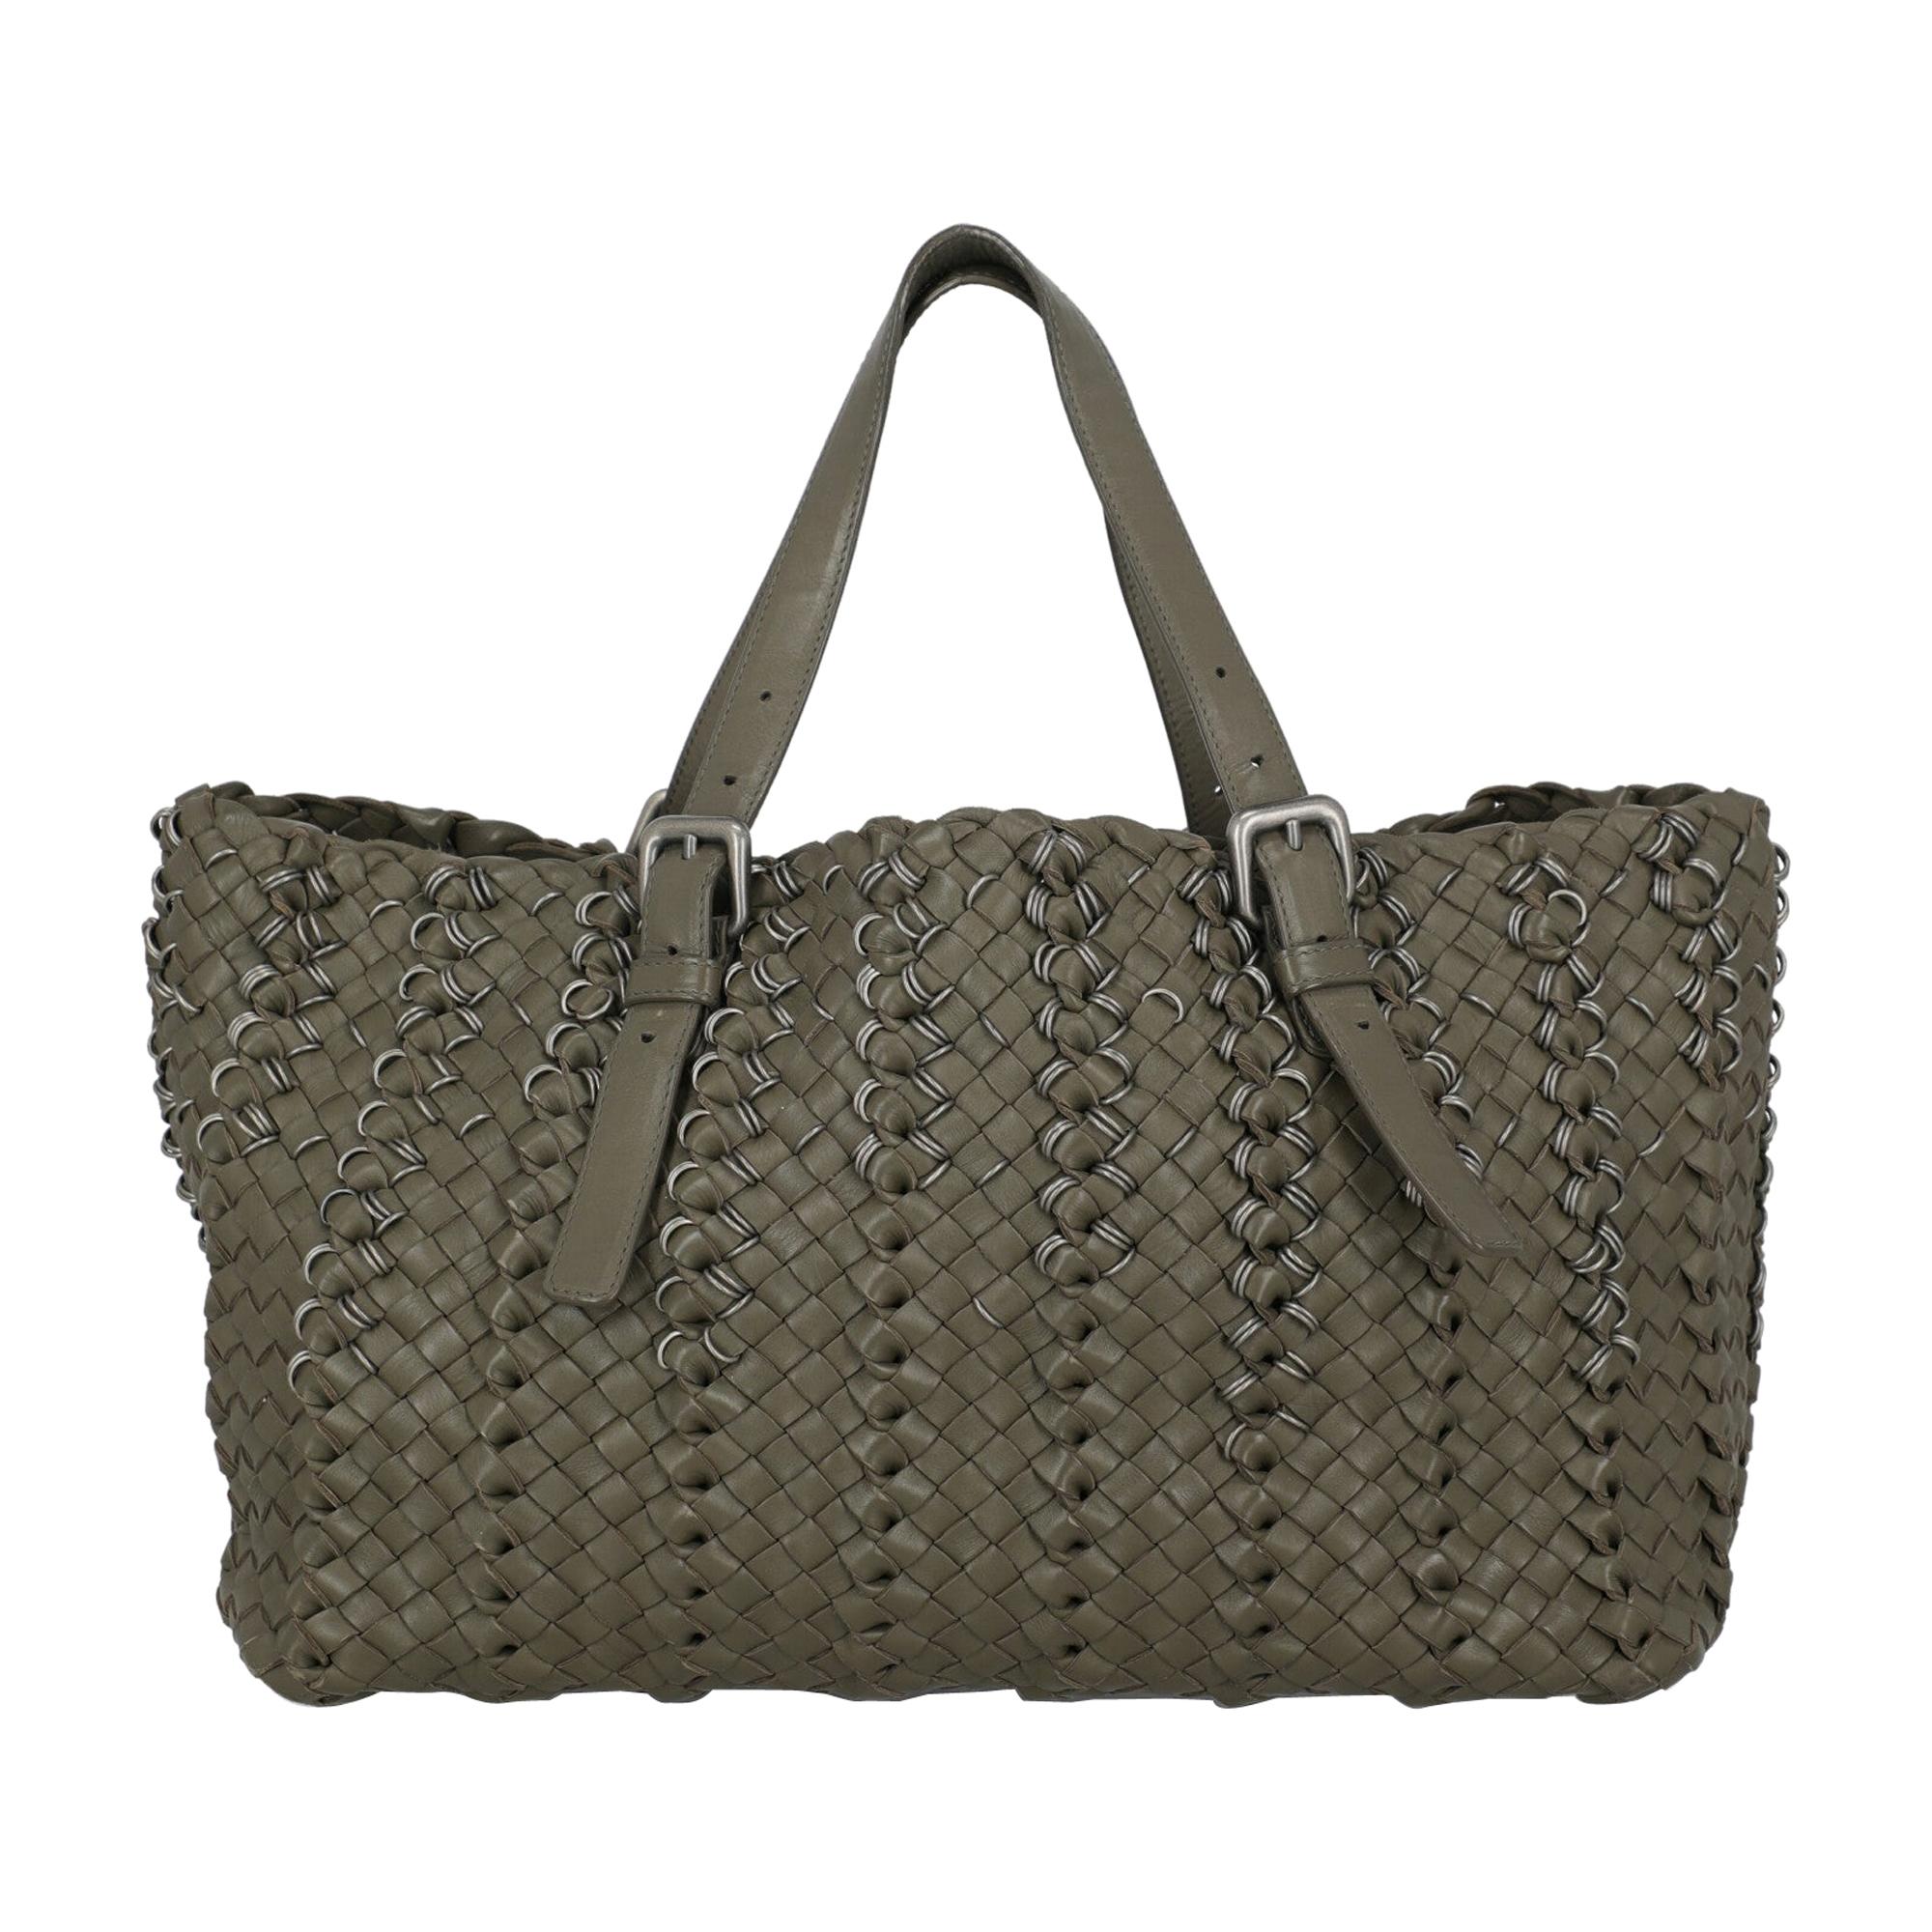 Bottega Veneta Women's Handbag Grey Leather For Sale